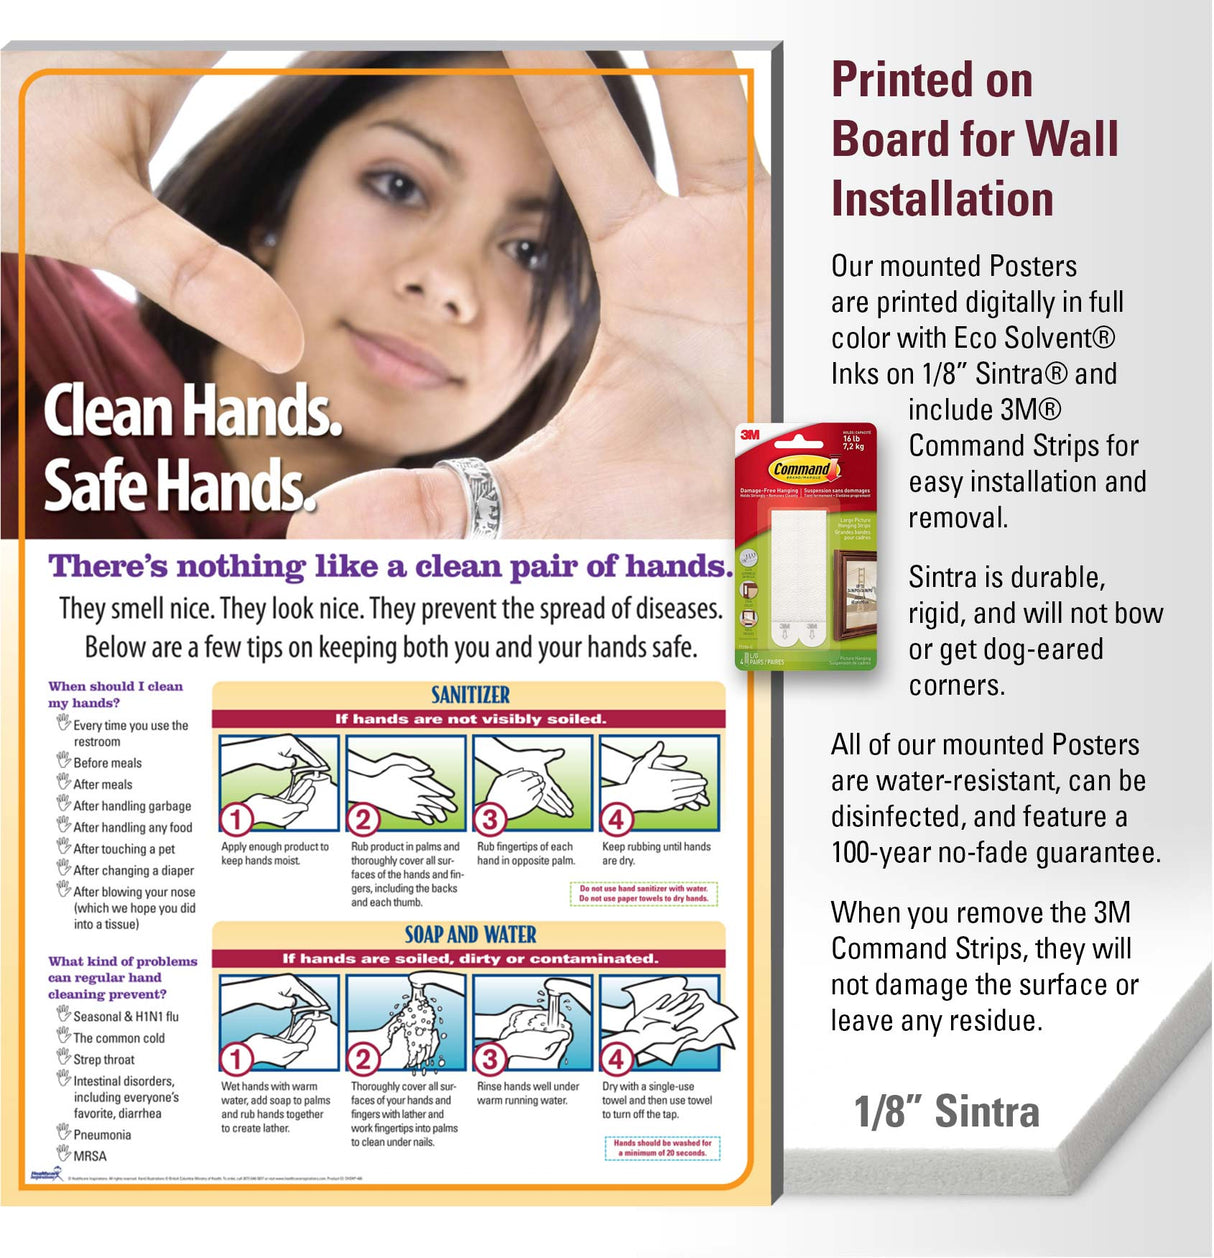 Clean Hands are Safe Hands Poster Design 406